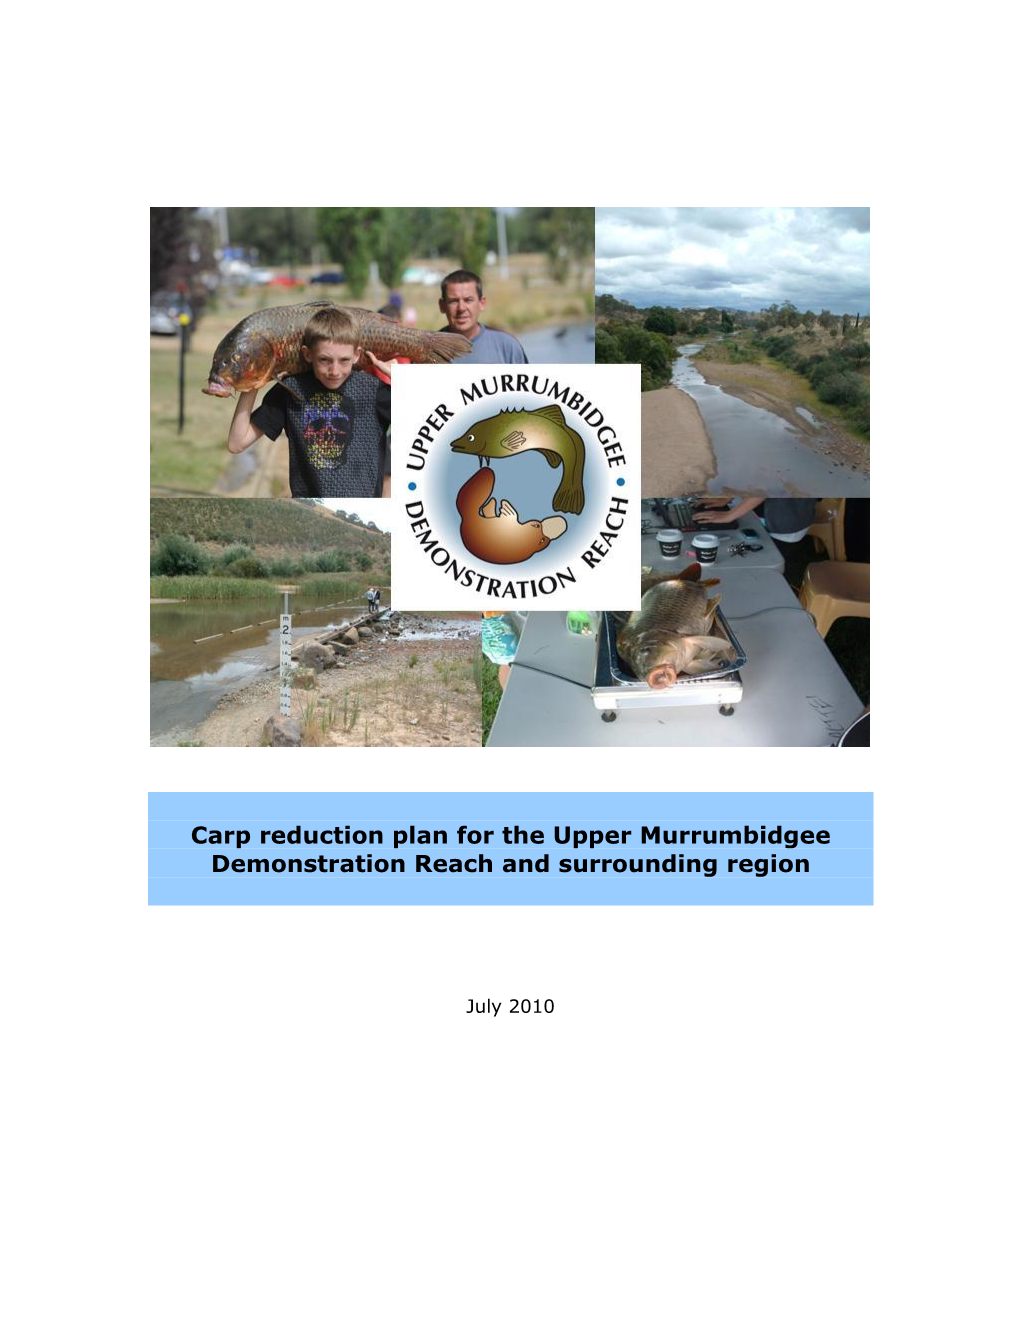 Carp Reduction Plan for the Upper Murrumbidgee Demonstration Reach and Surrounding Region